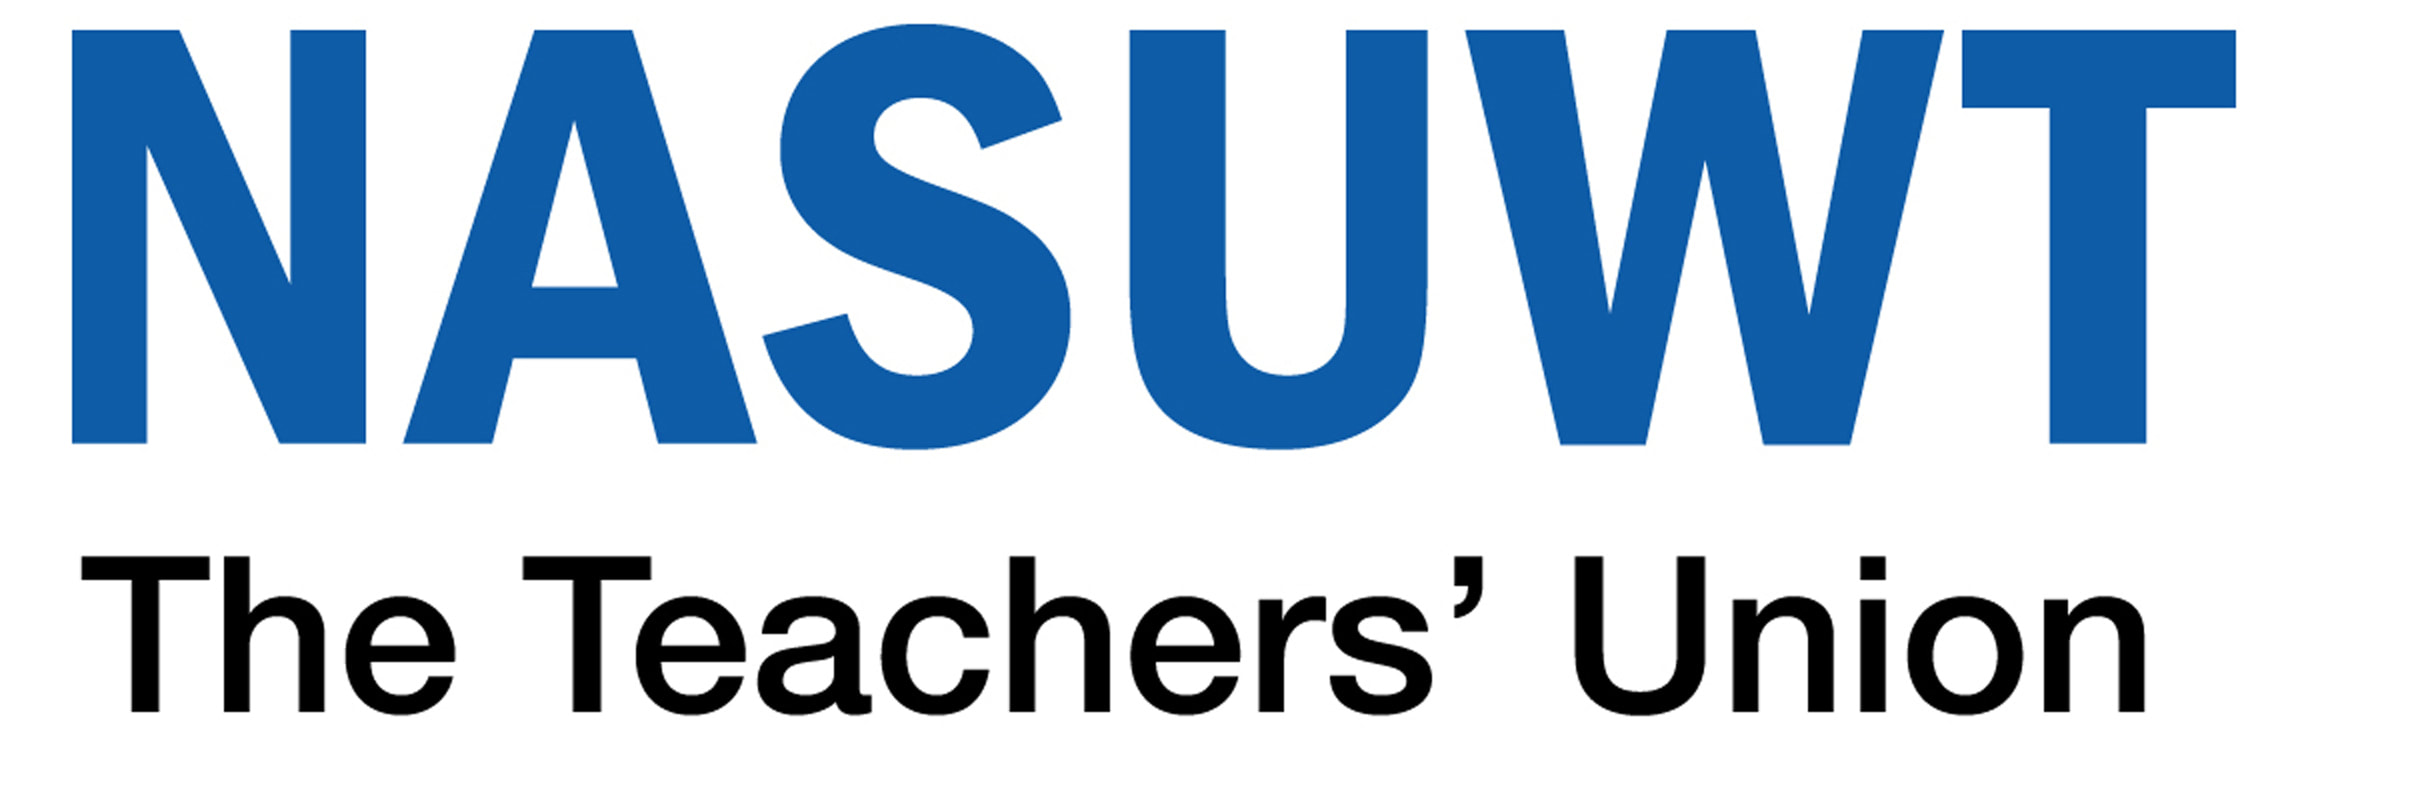 NASUWT - The Teachers' Union